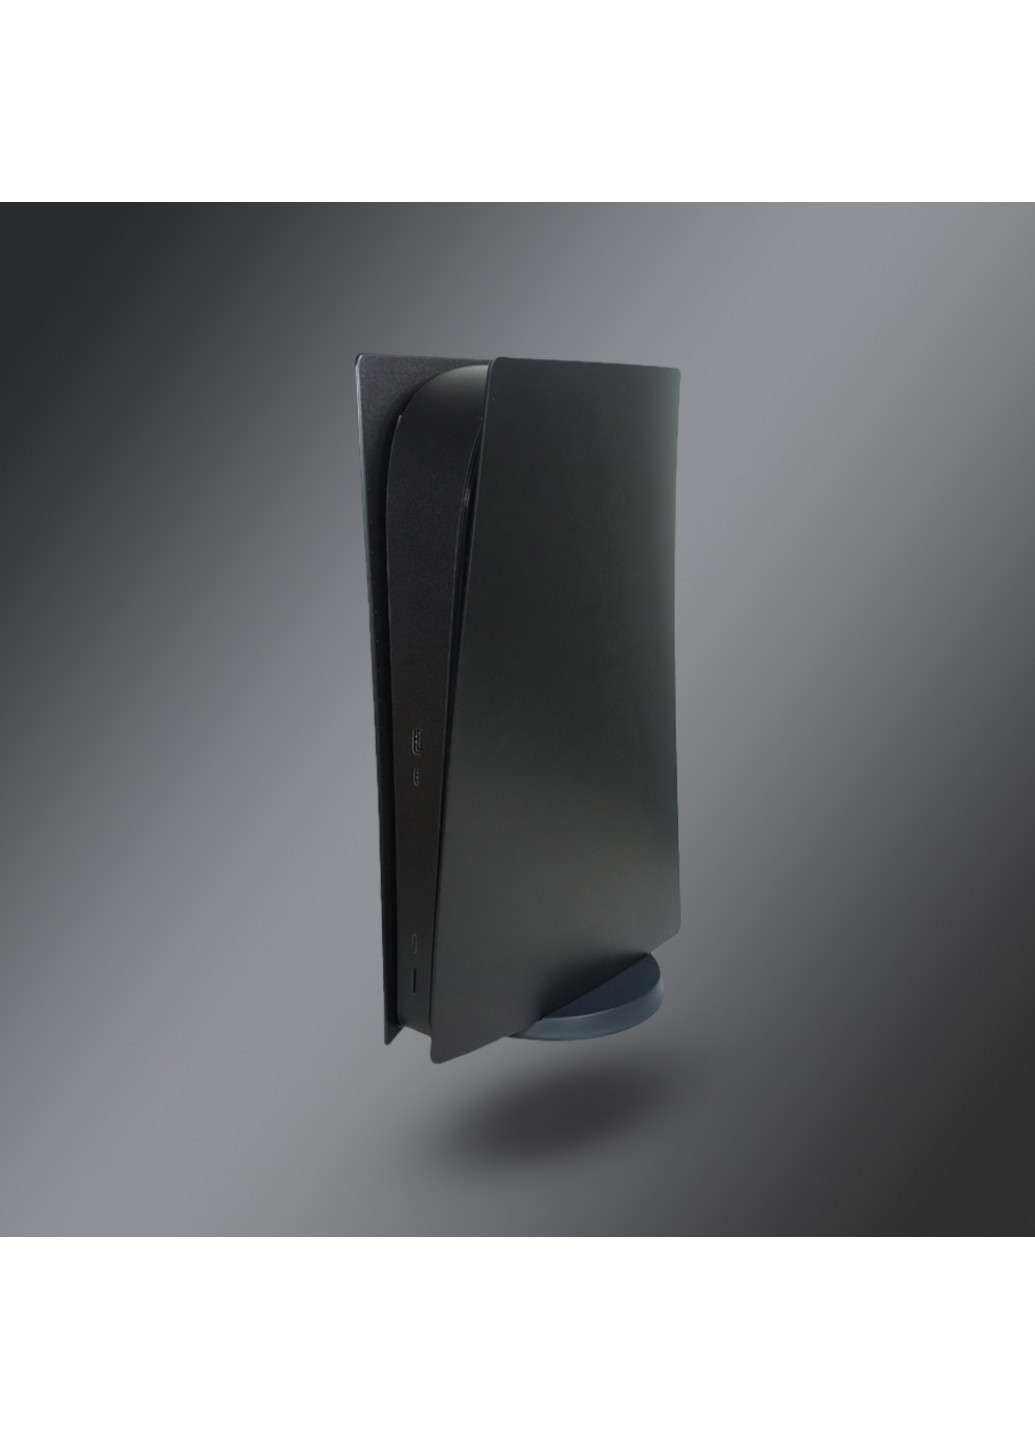 Змінні панелі для Playstation 5 Digital Edition black DOBE faceplate de (259139336)